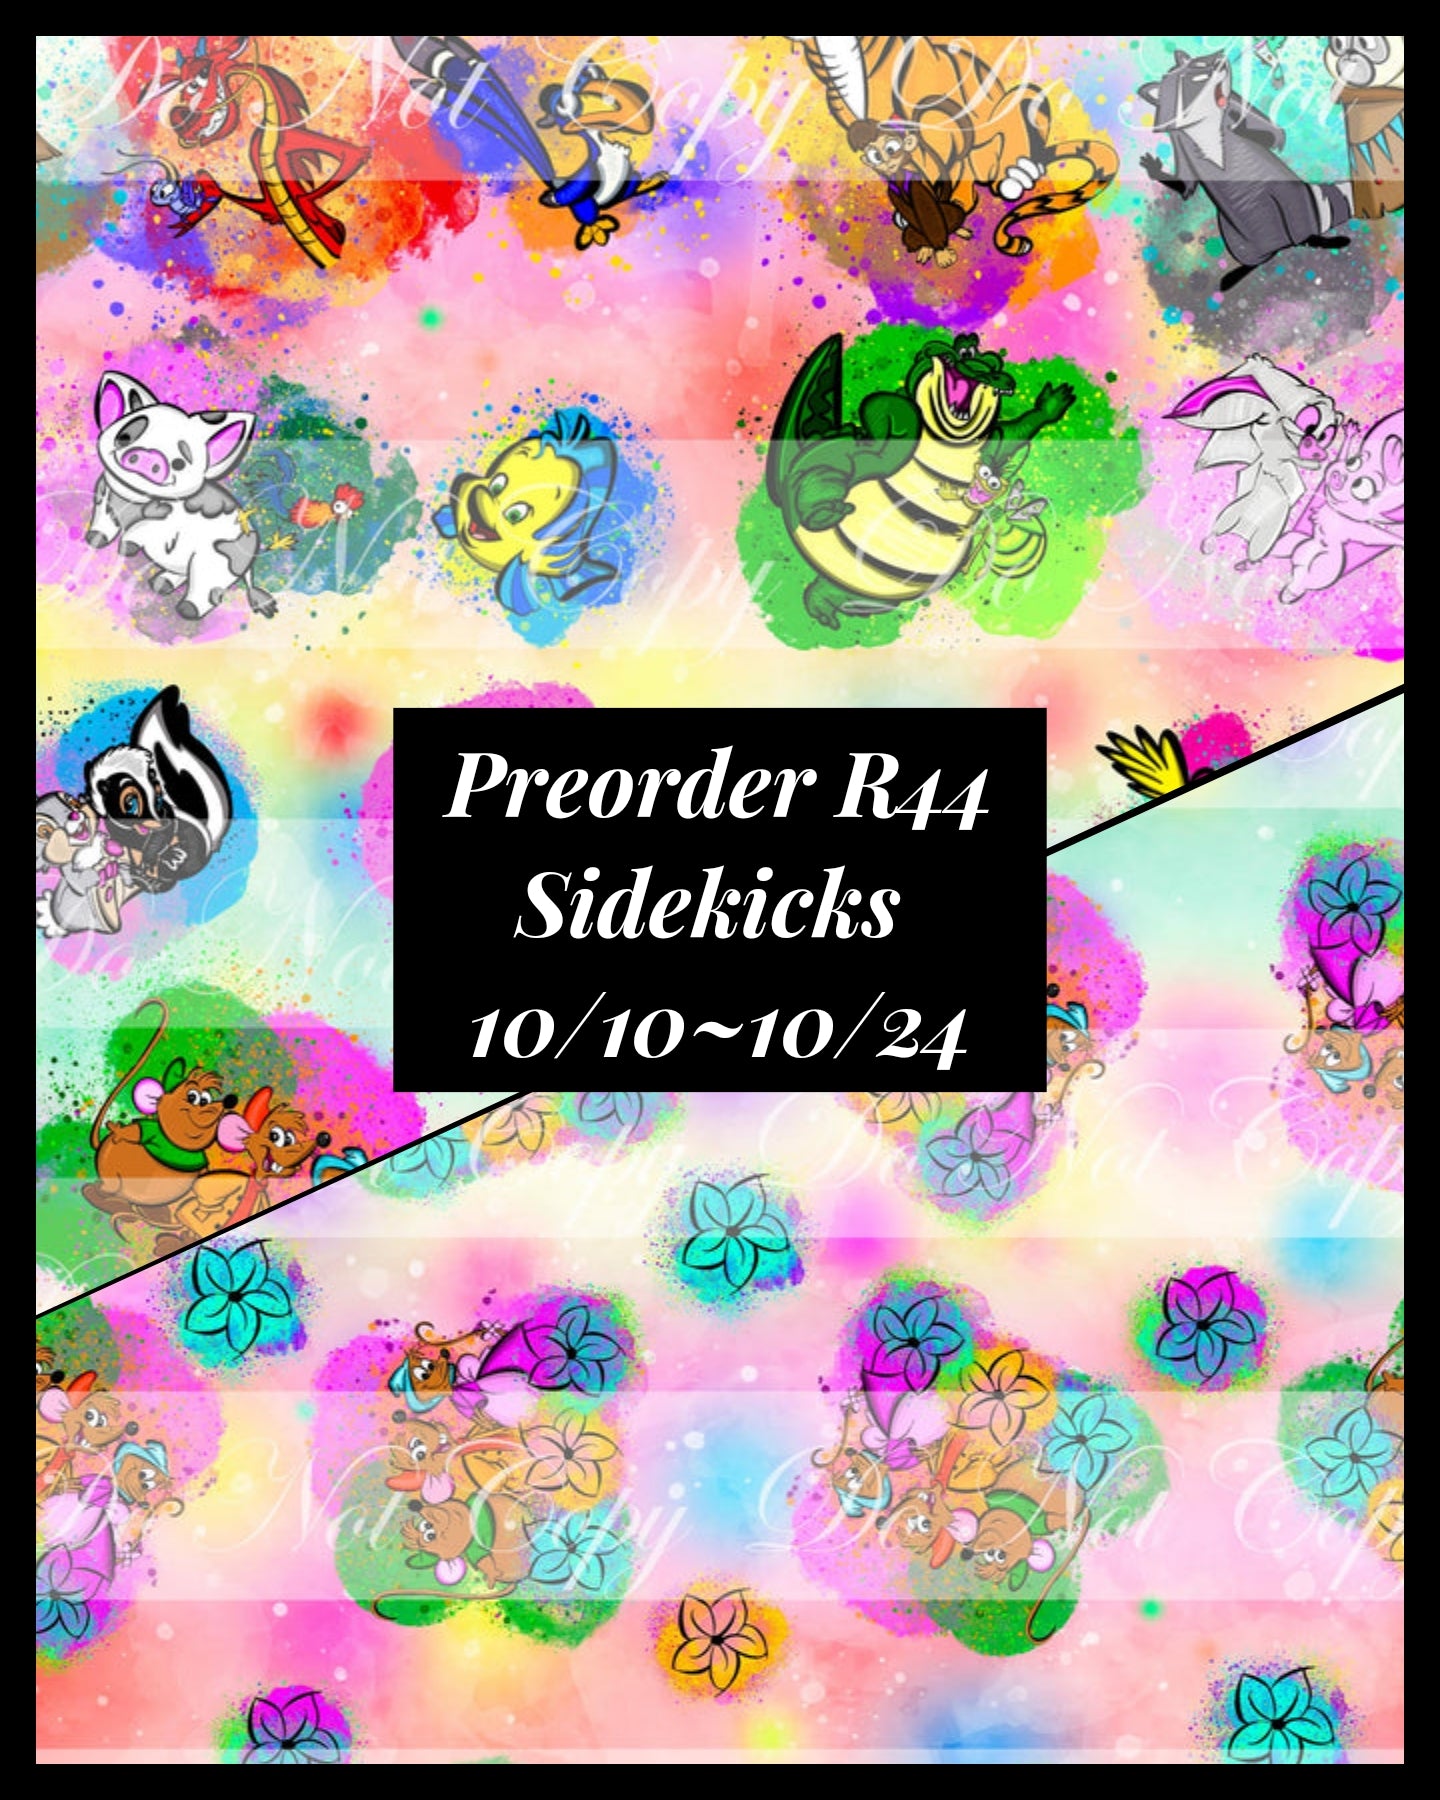 PREORDER R44 - Sidekicks